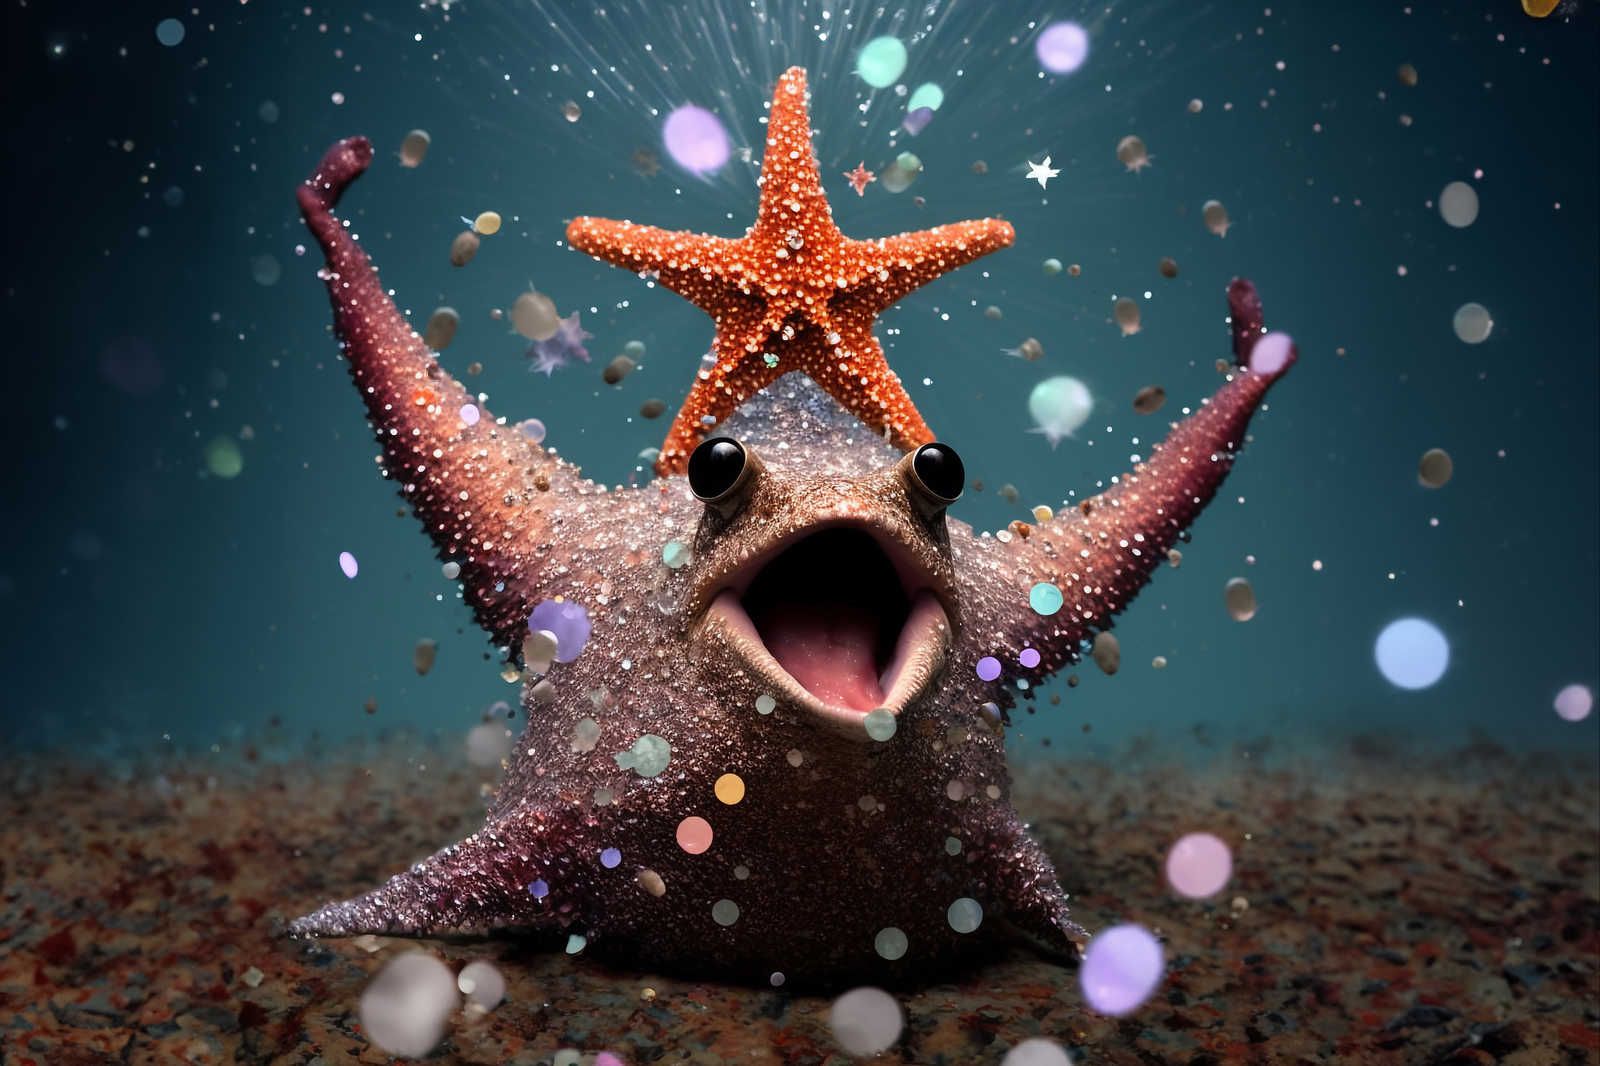             KI-Leinwandbild »party starfish« – 90 cm x 60 cm
        